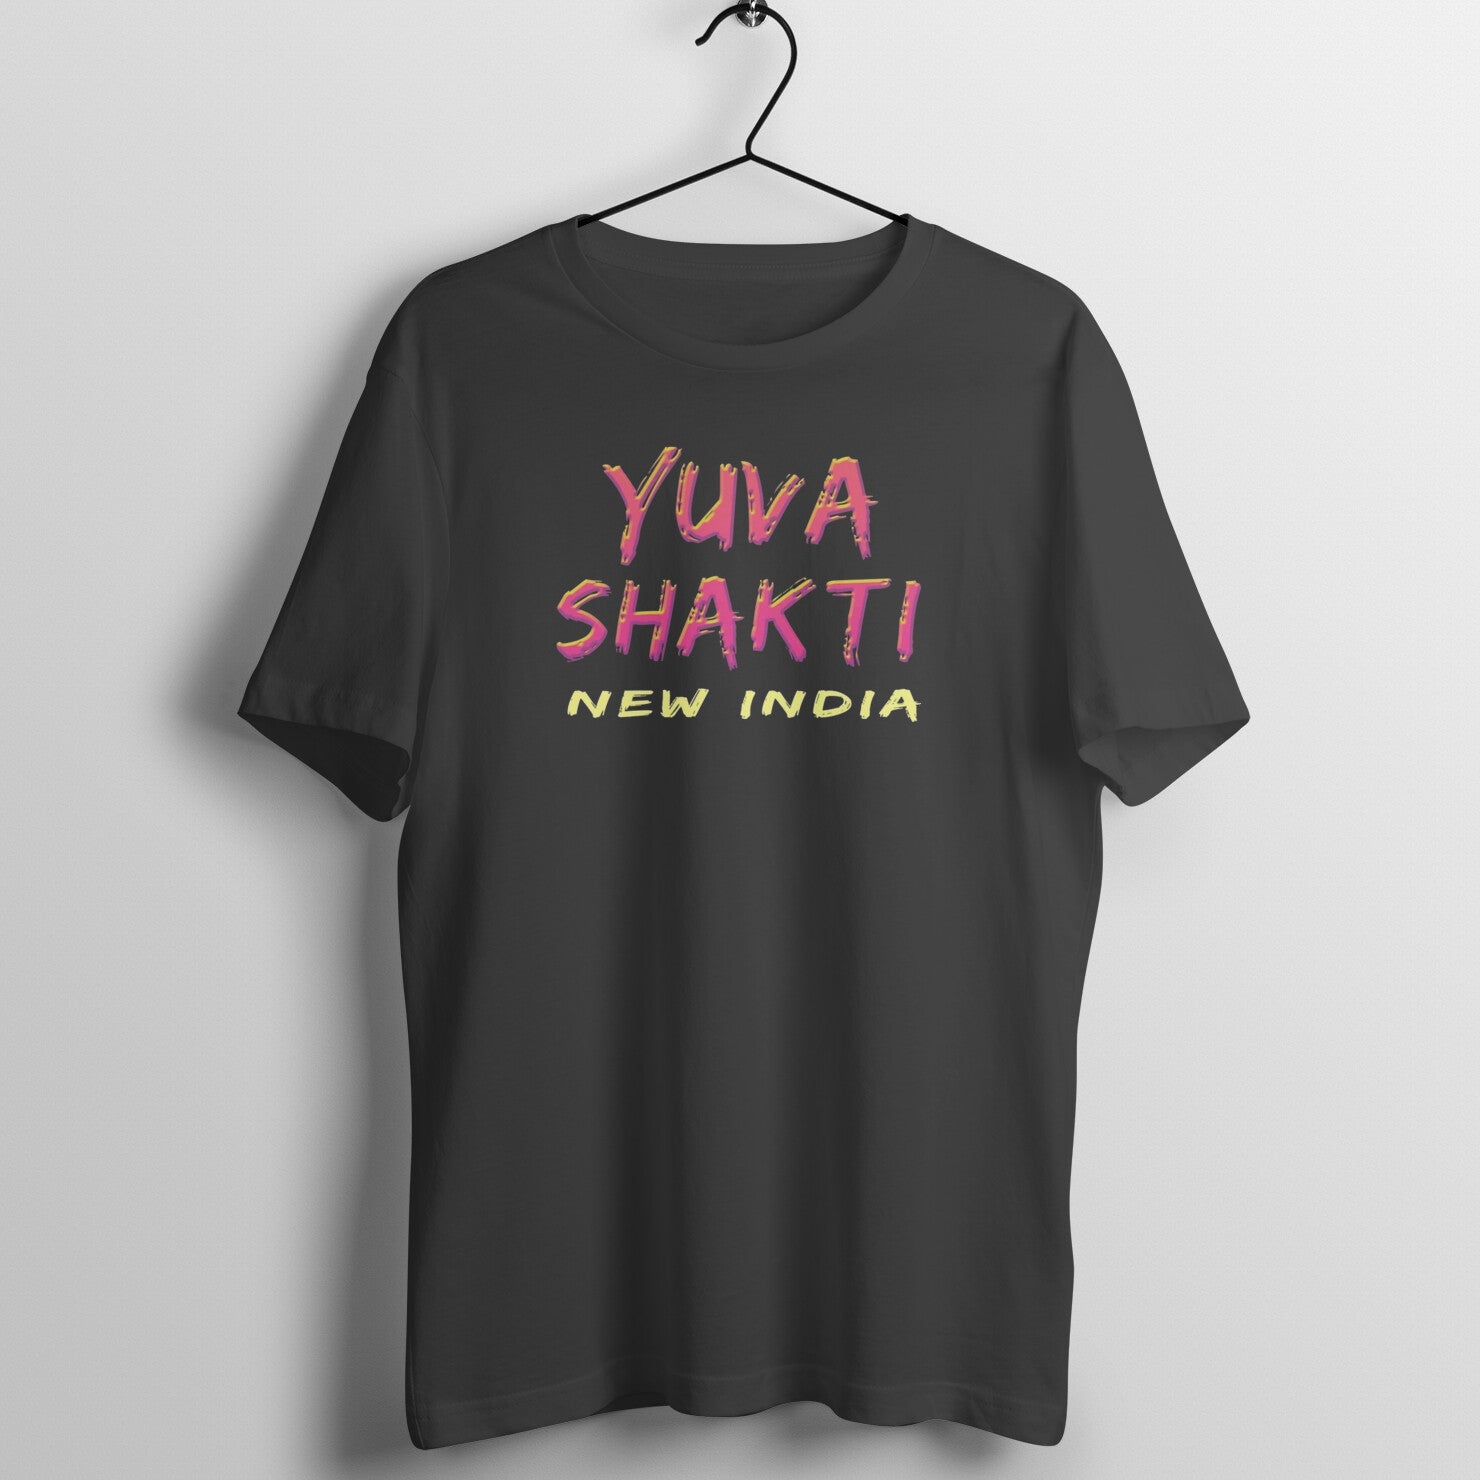 Yuva Shakti New India Exclusive Black T Shirt for Youth